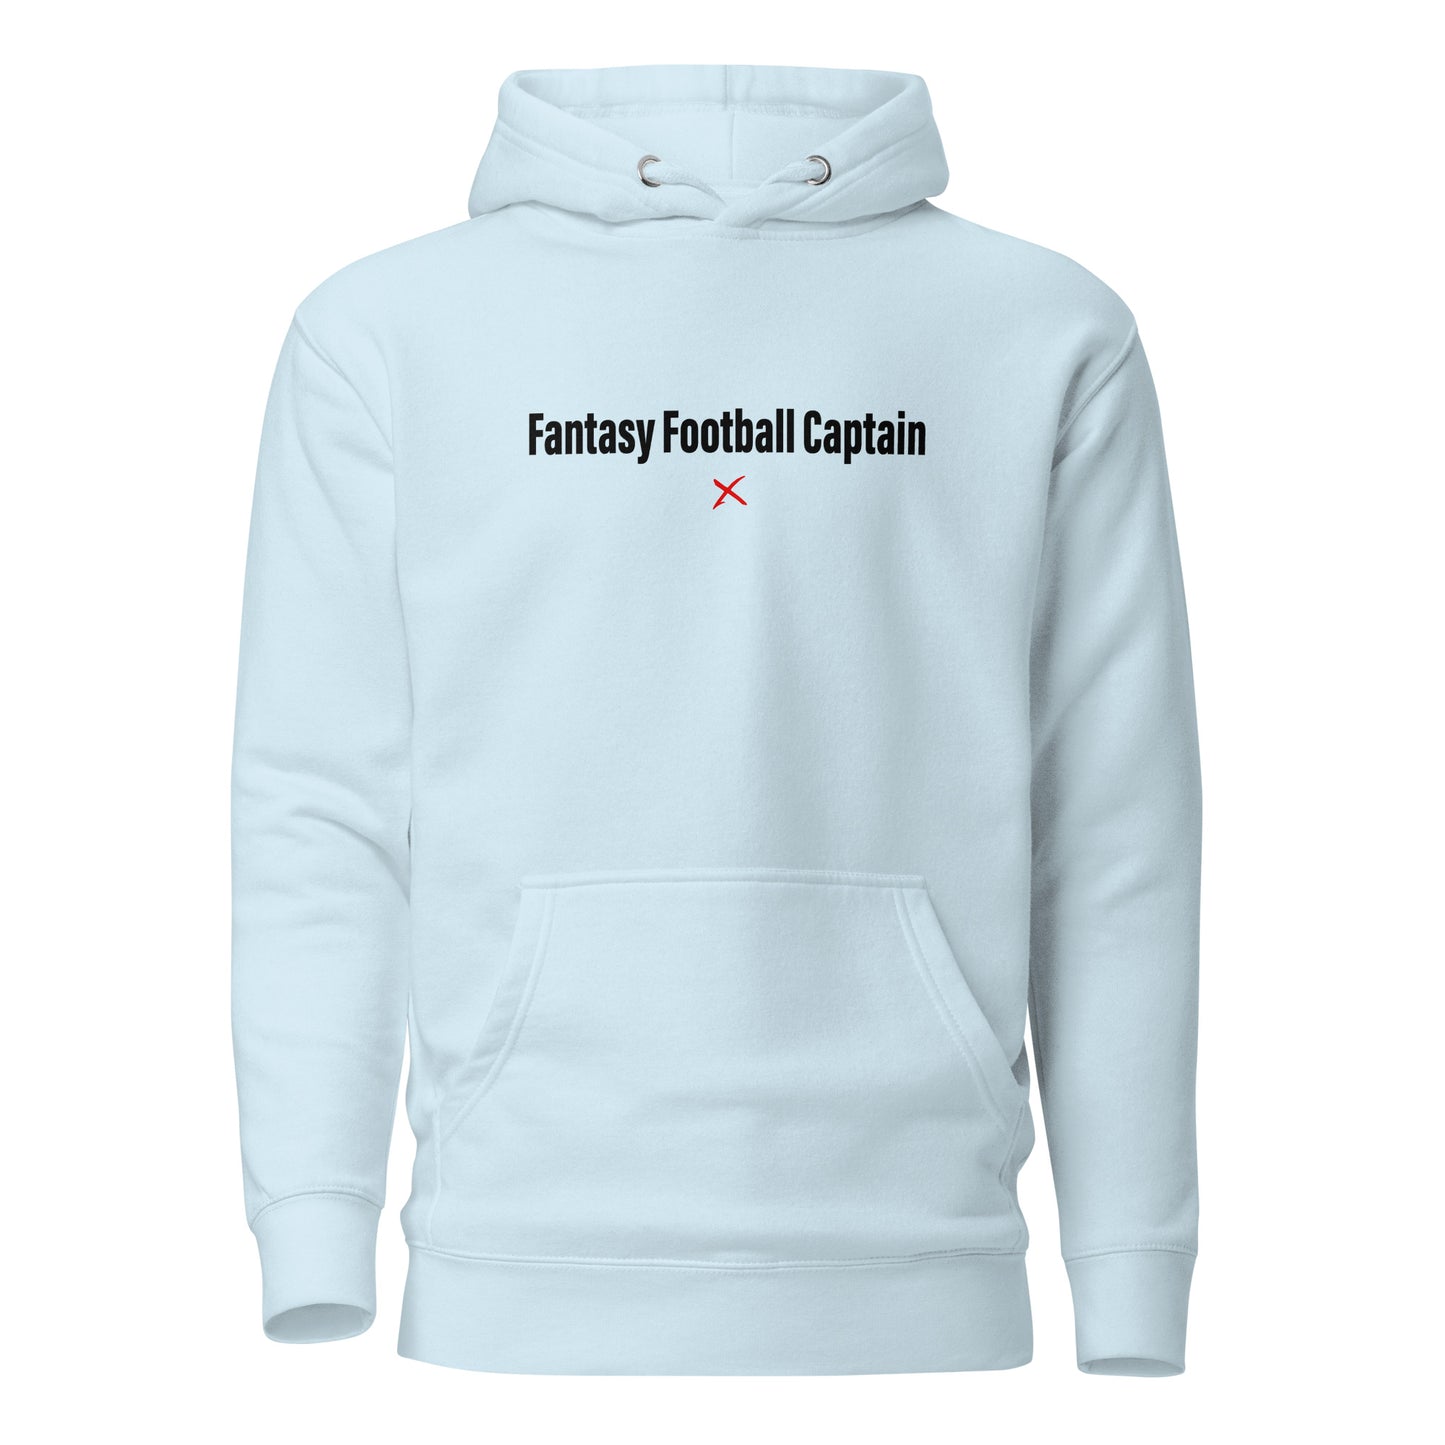 Fantasy Football Captain - Hoodie